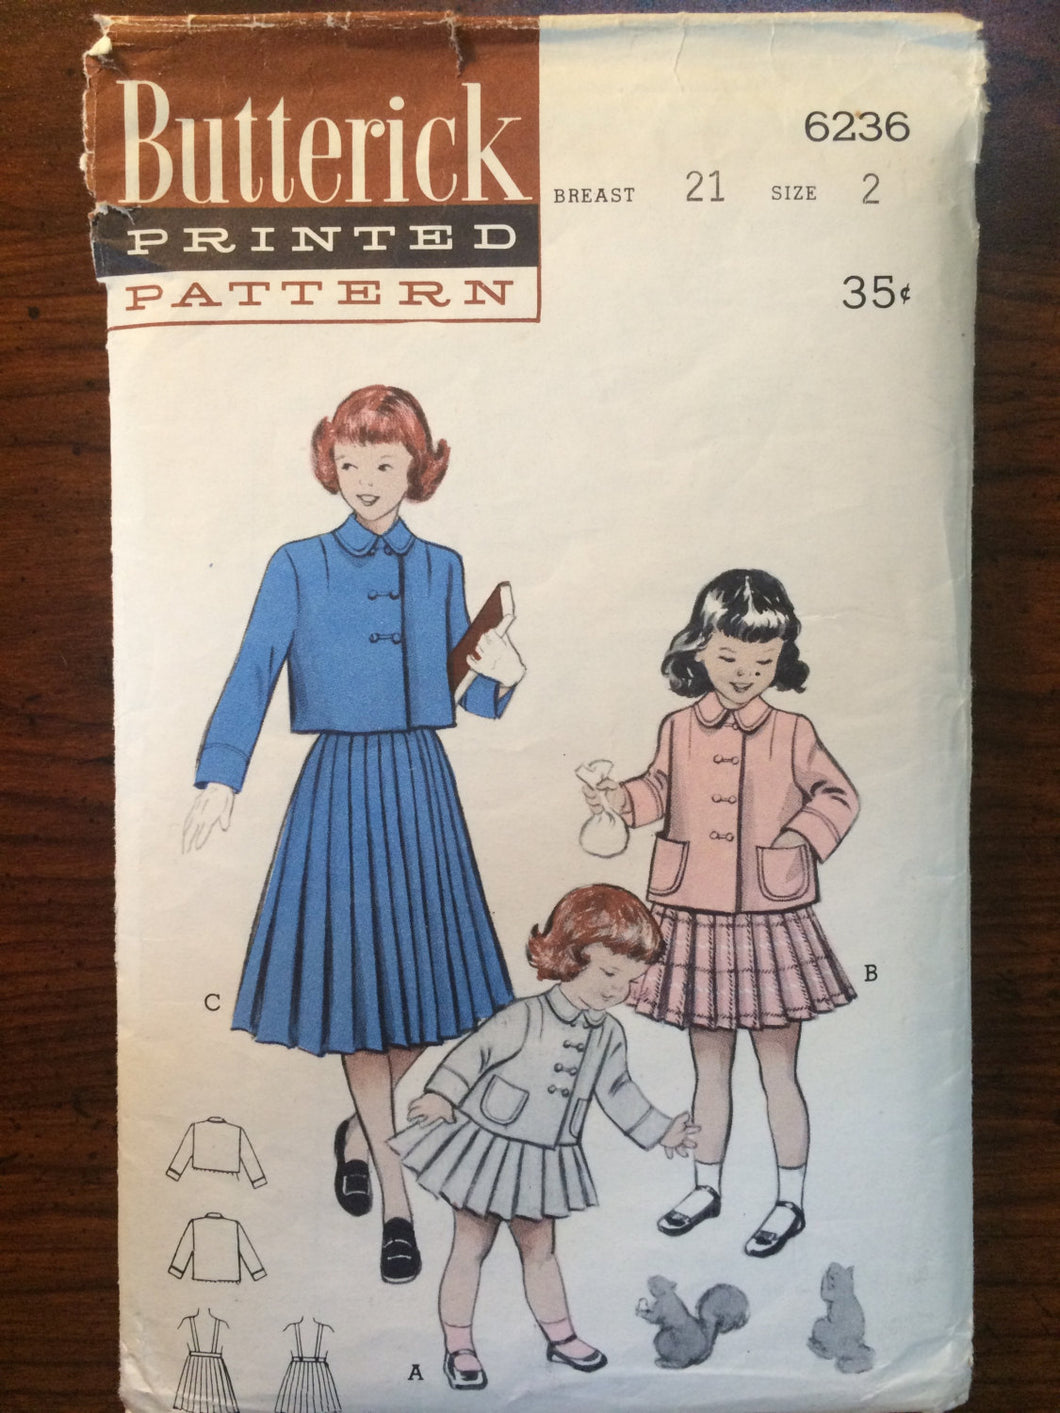 Vintage 1950s Butterick Girl's Suit Pattern #6236 Size 2, Breast 21